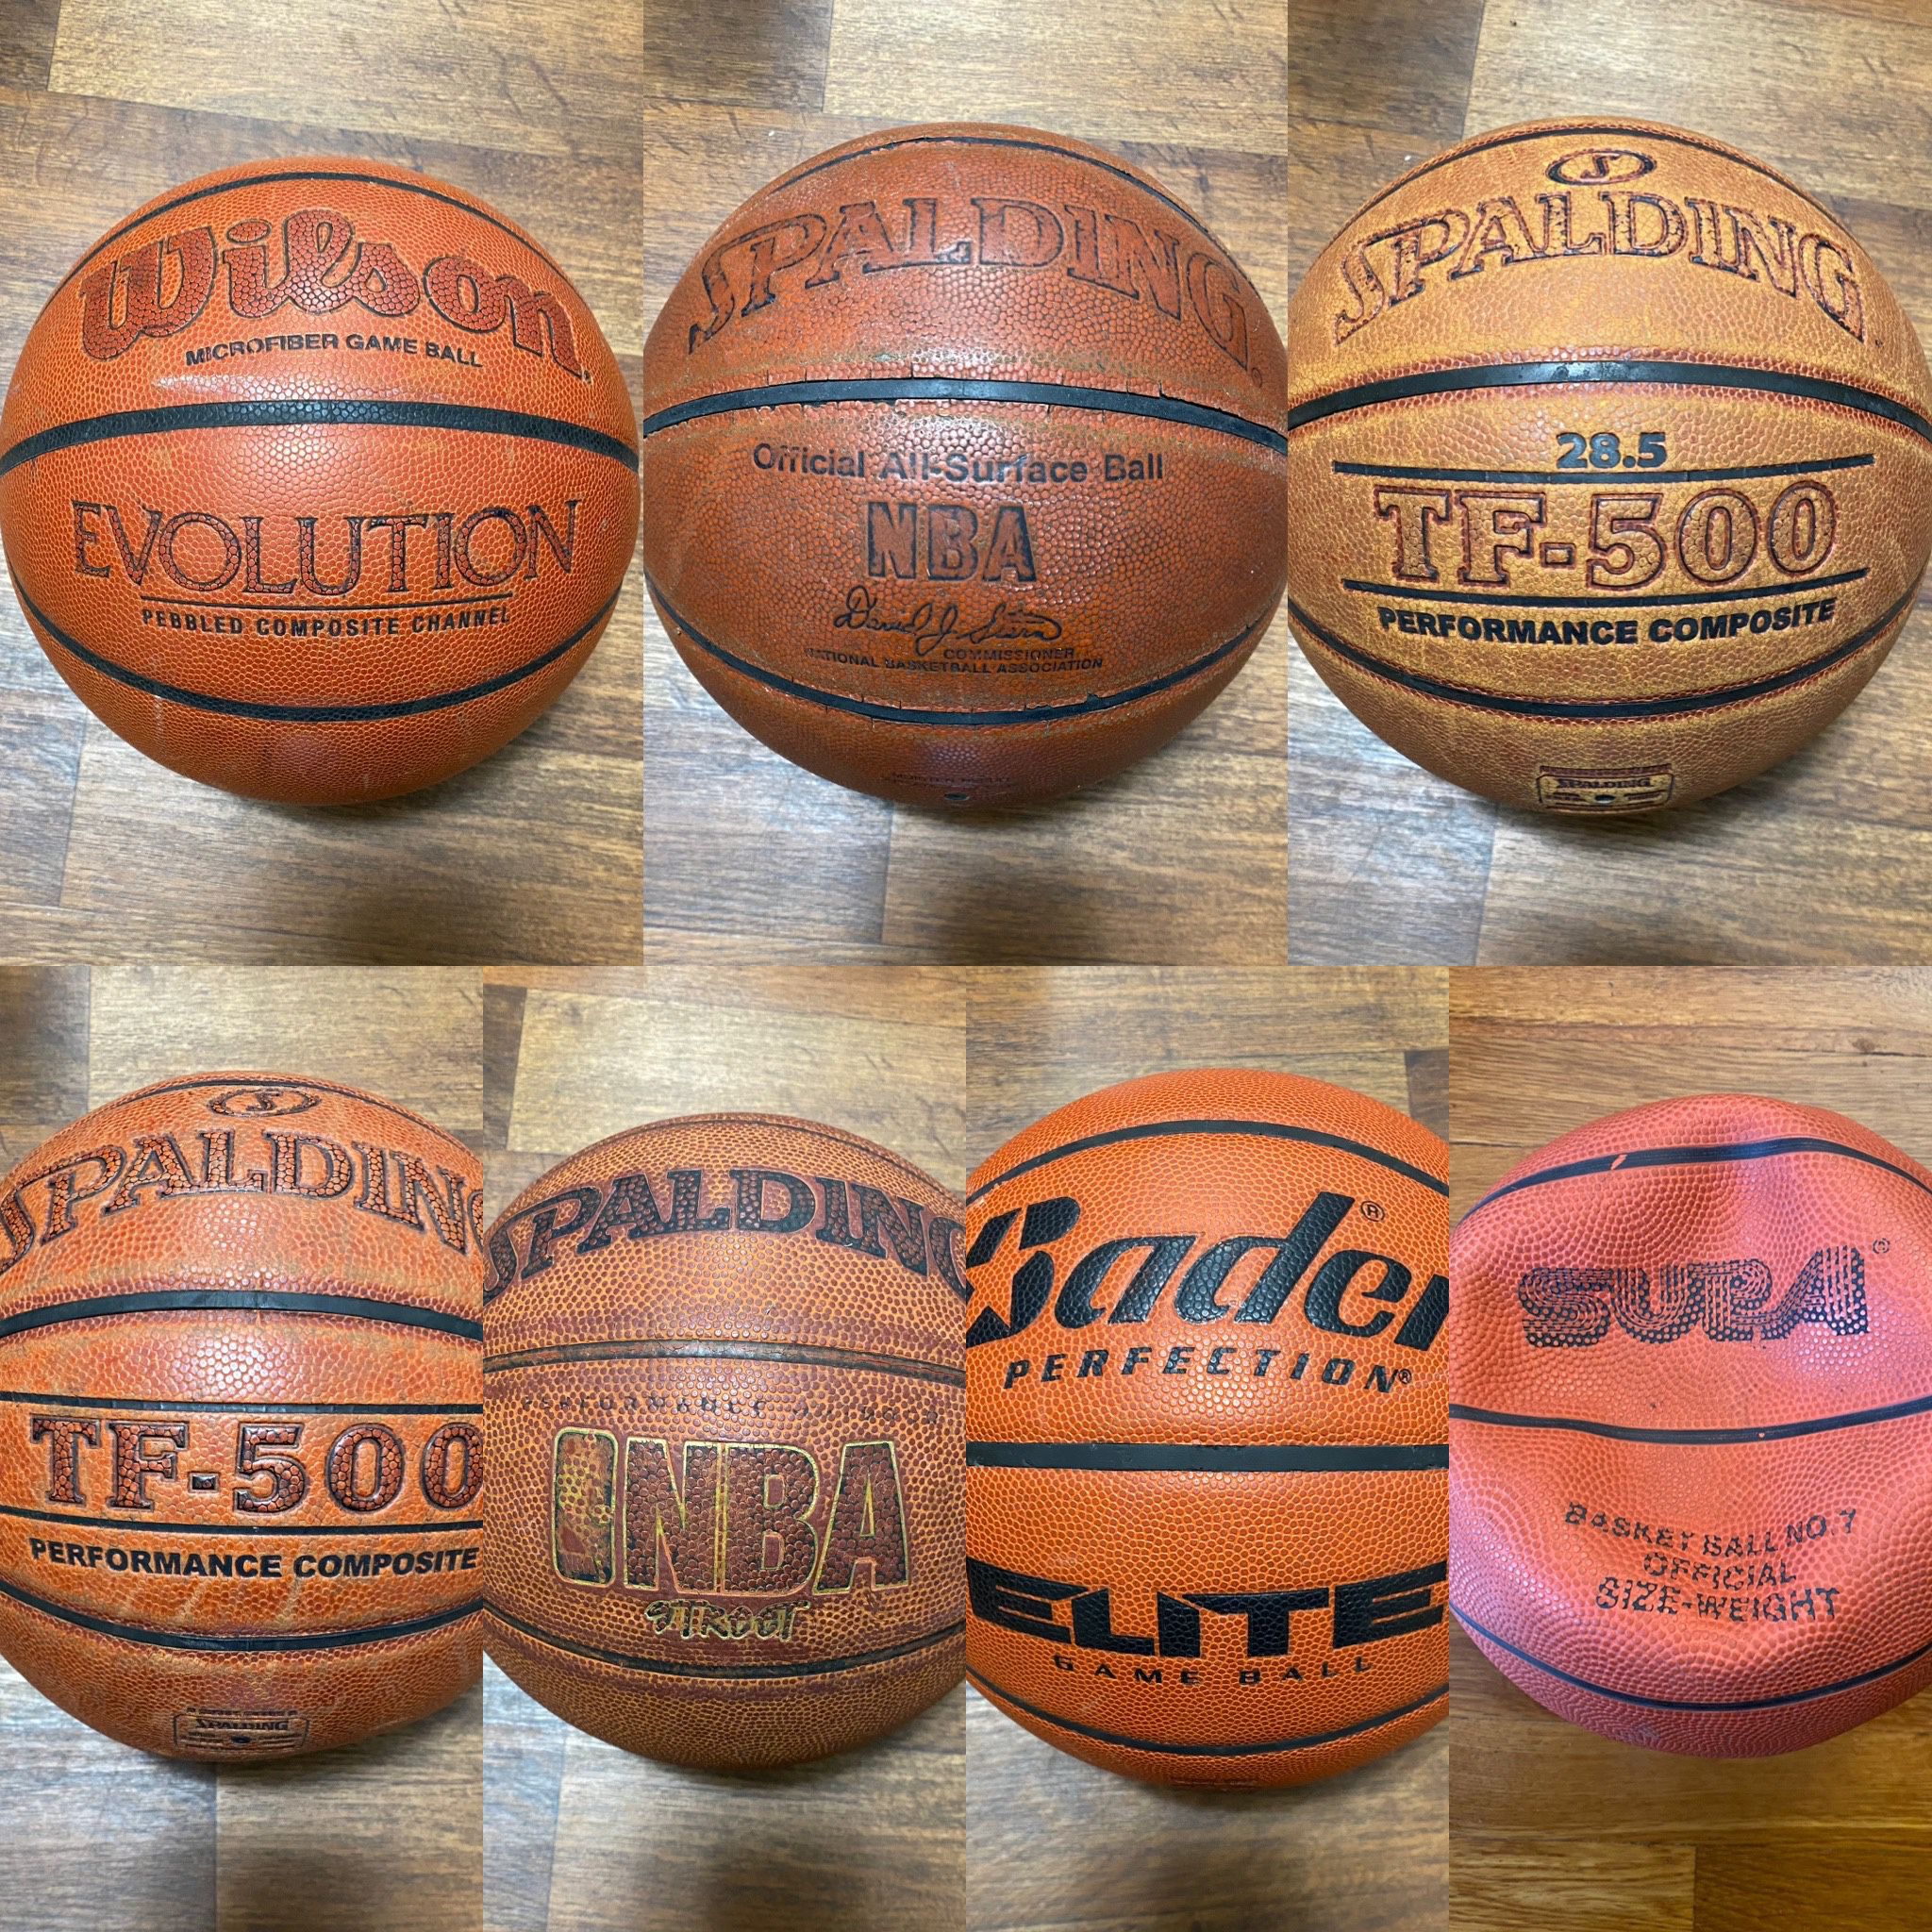 Spalding / Wilson / Baden Basketballs